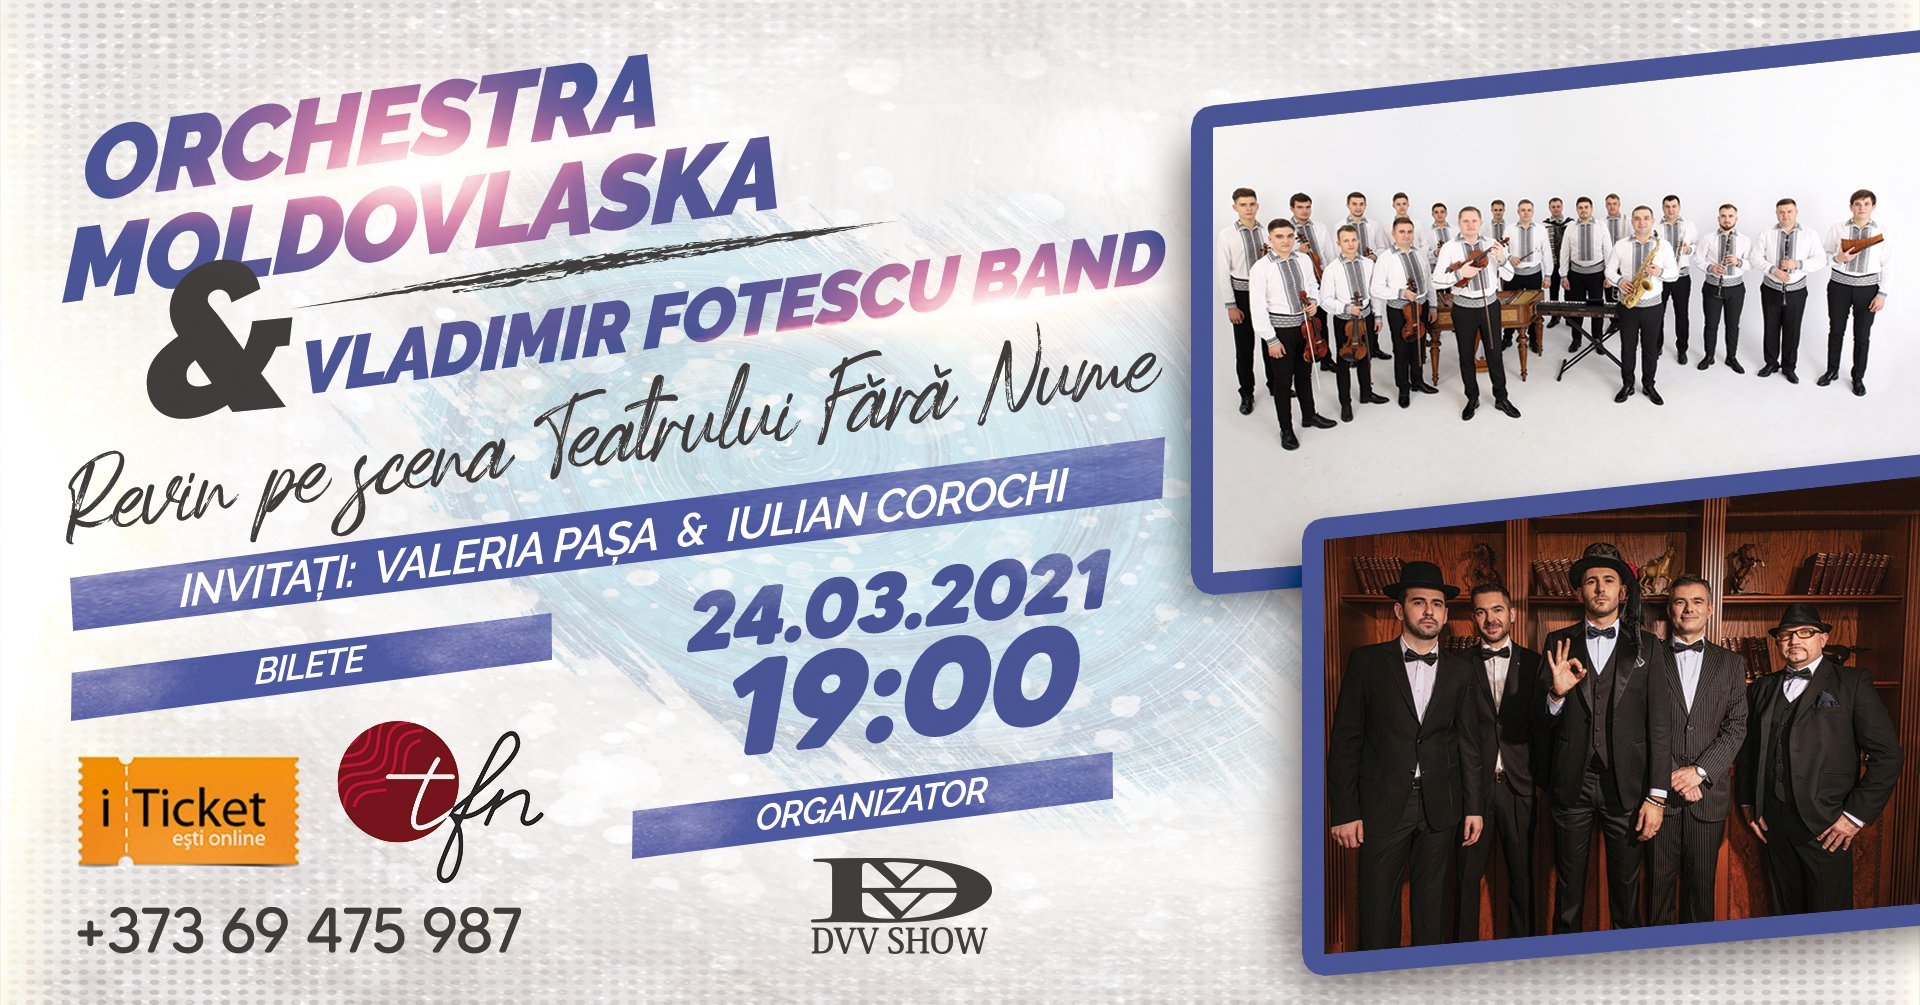 Orchestra Moldovlaska & Vladimir Fotescu Band